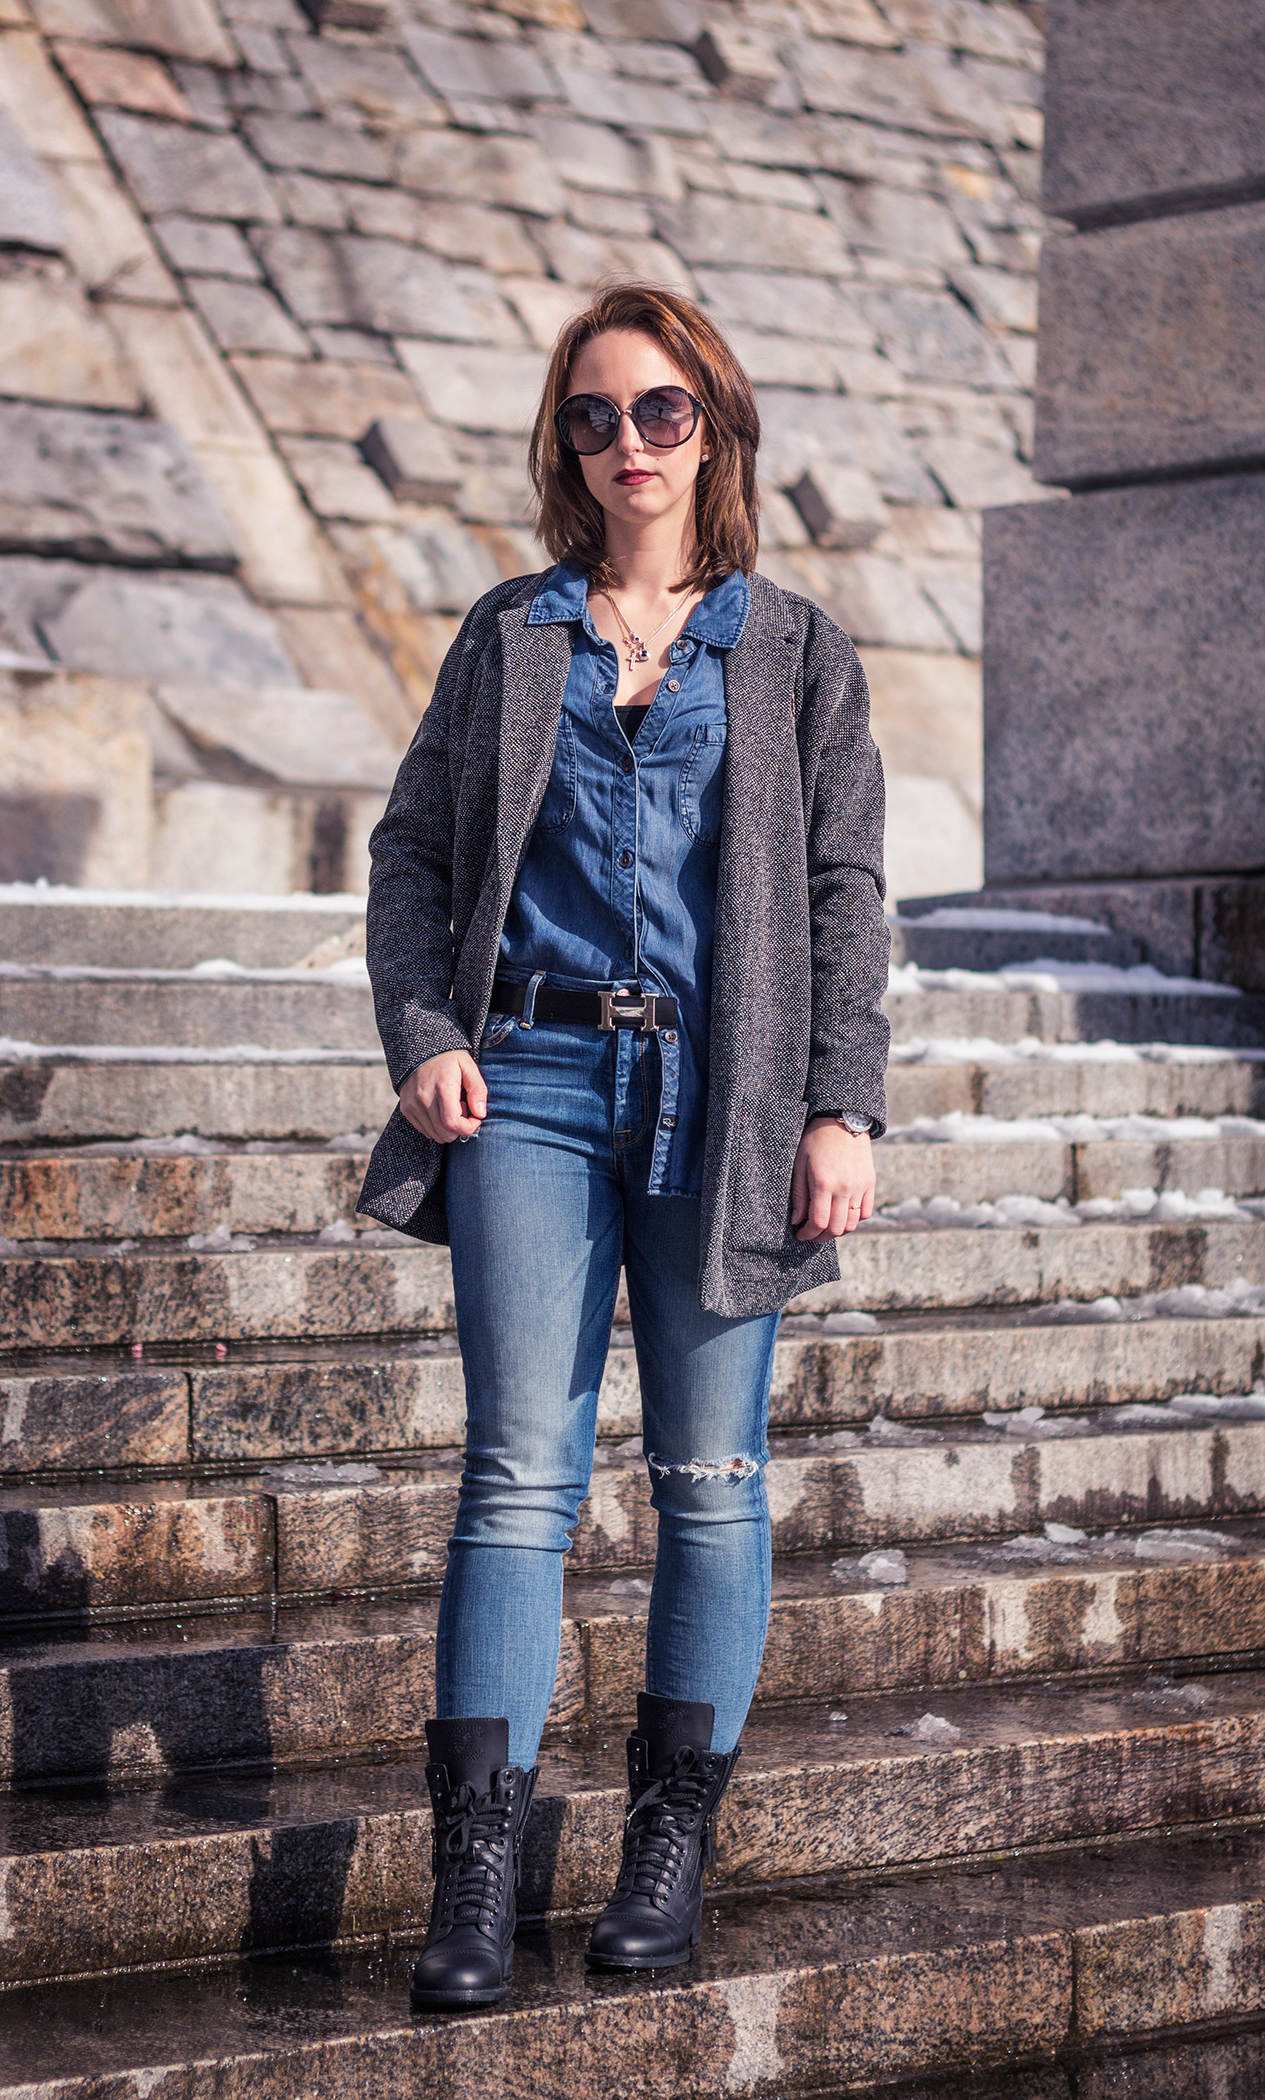 Blazer, jeans, boots: the fashion uniform